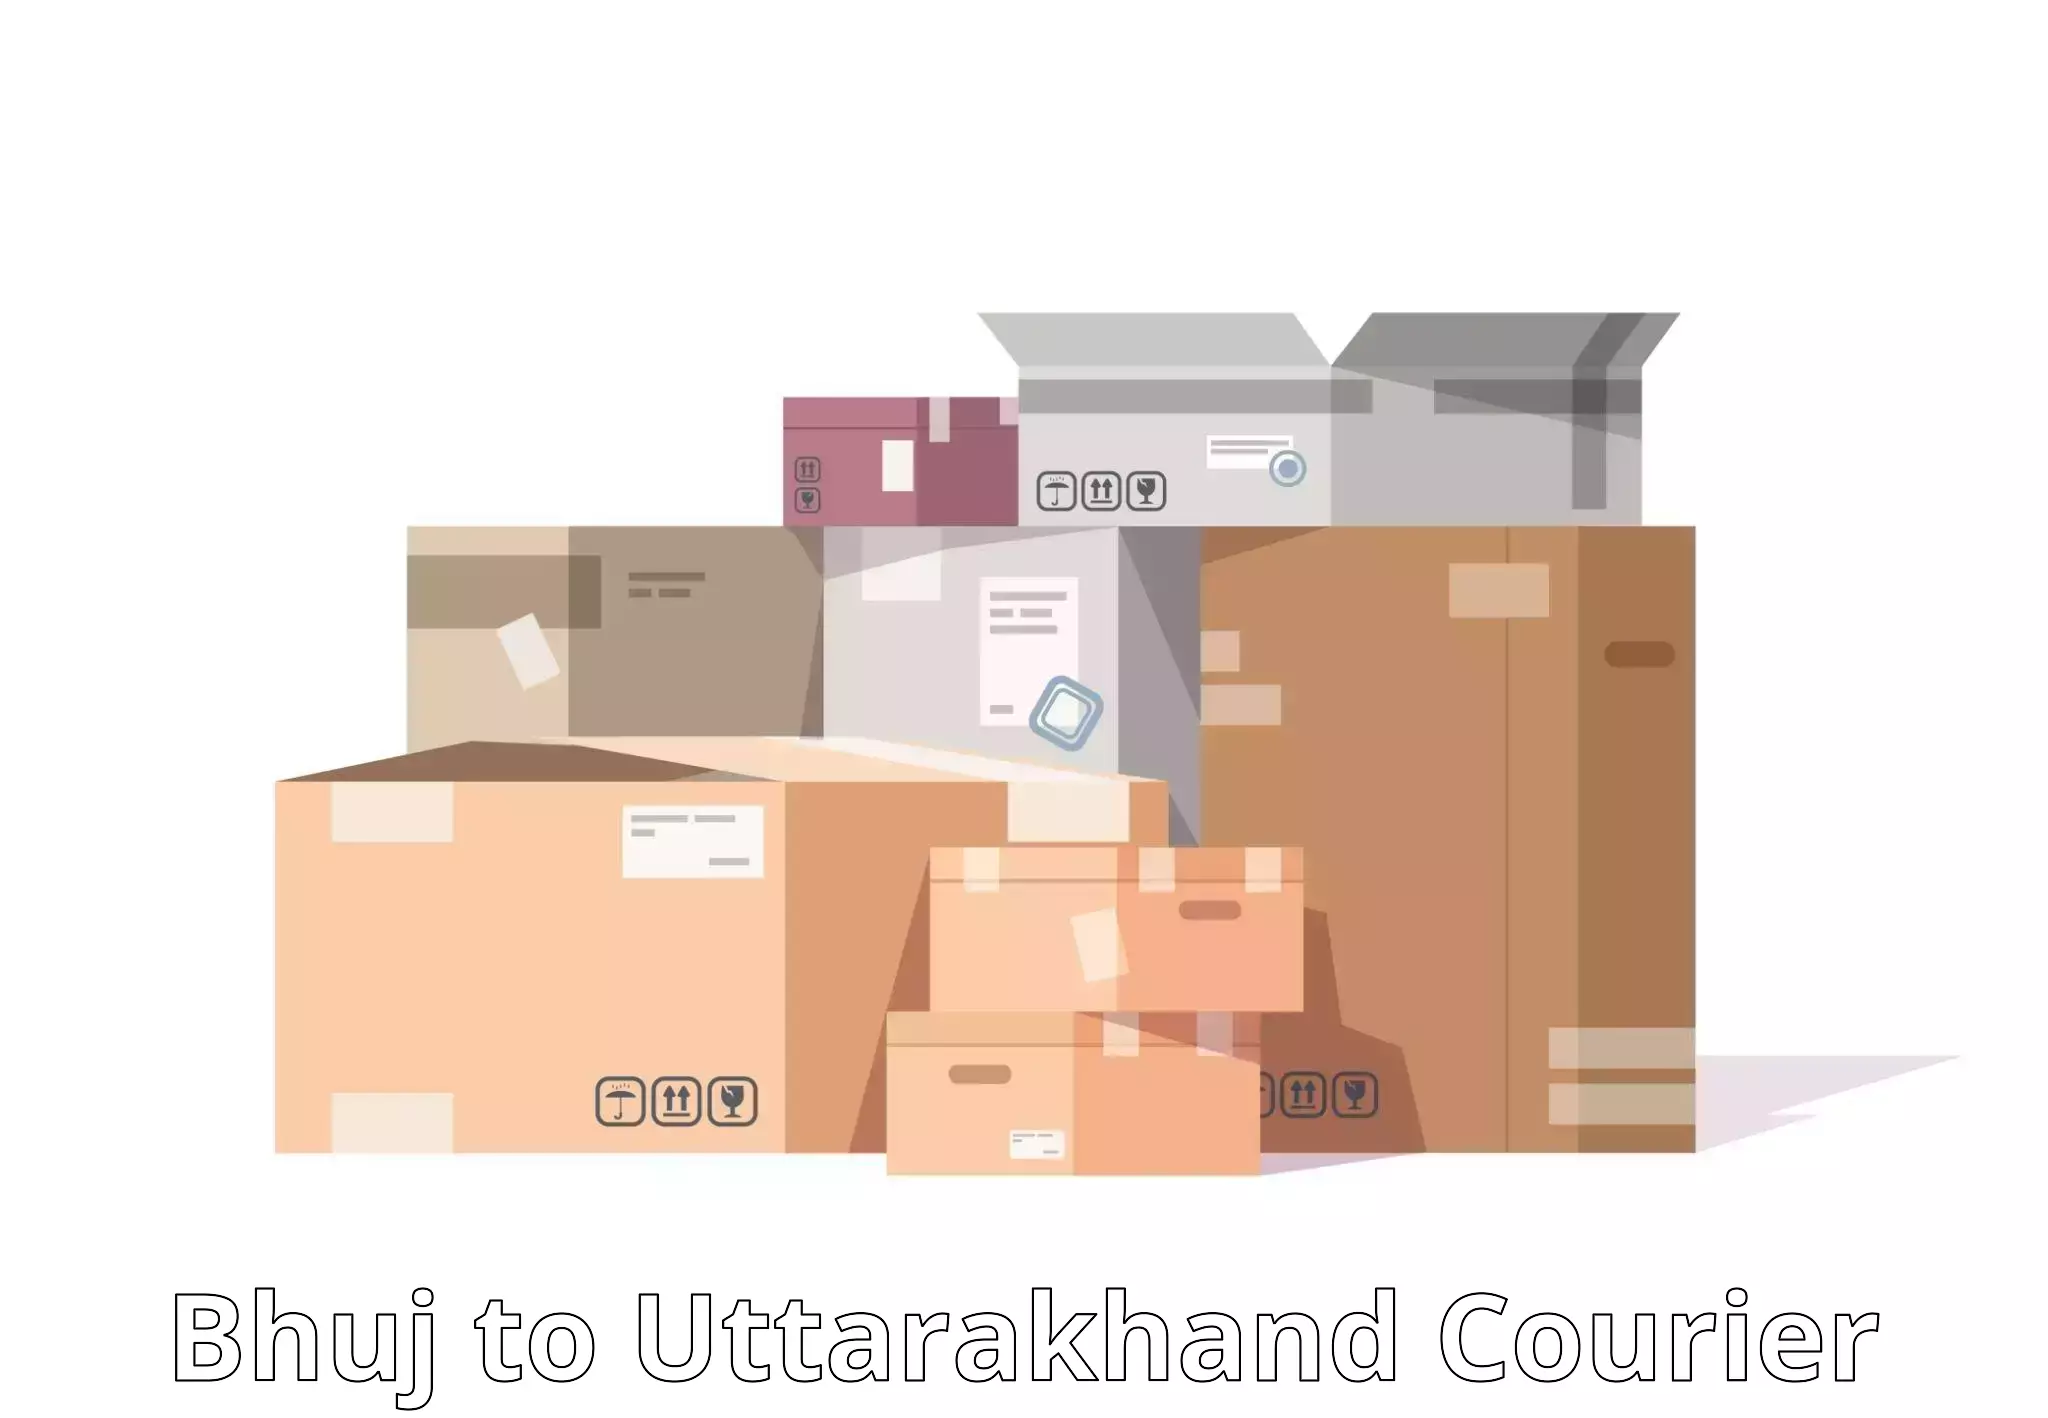 State-of-the-art courier technology Bhuj to Uttarakhand